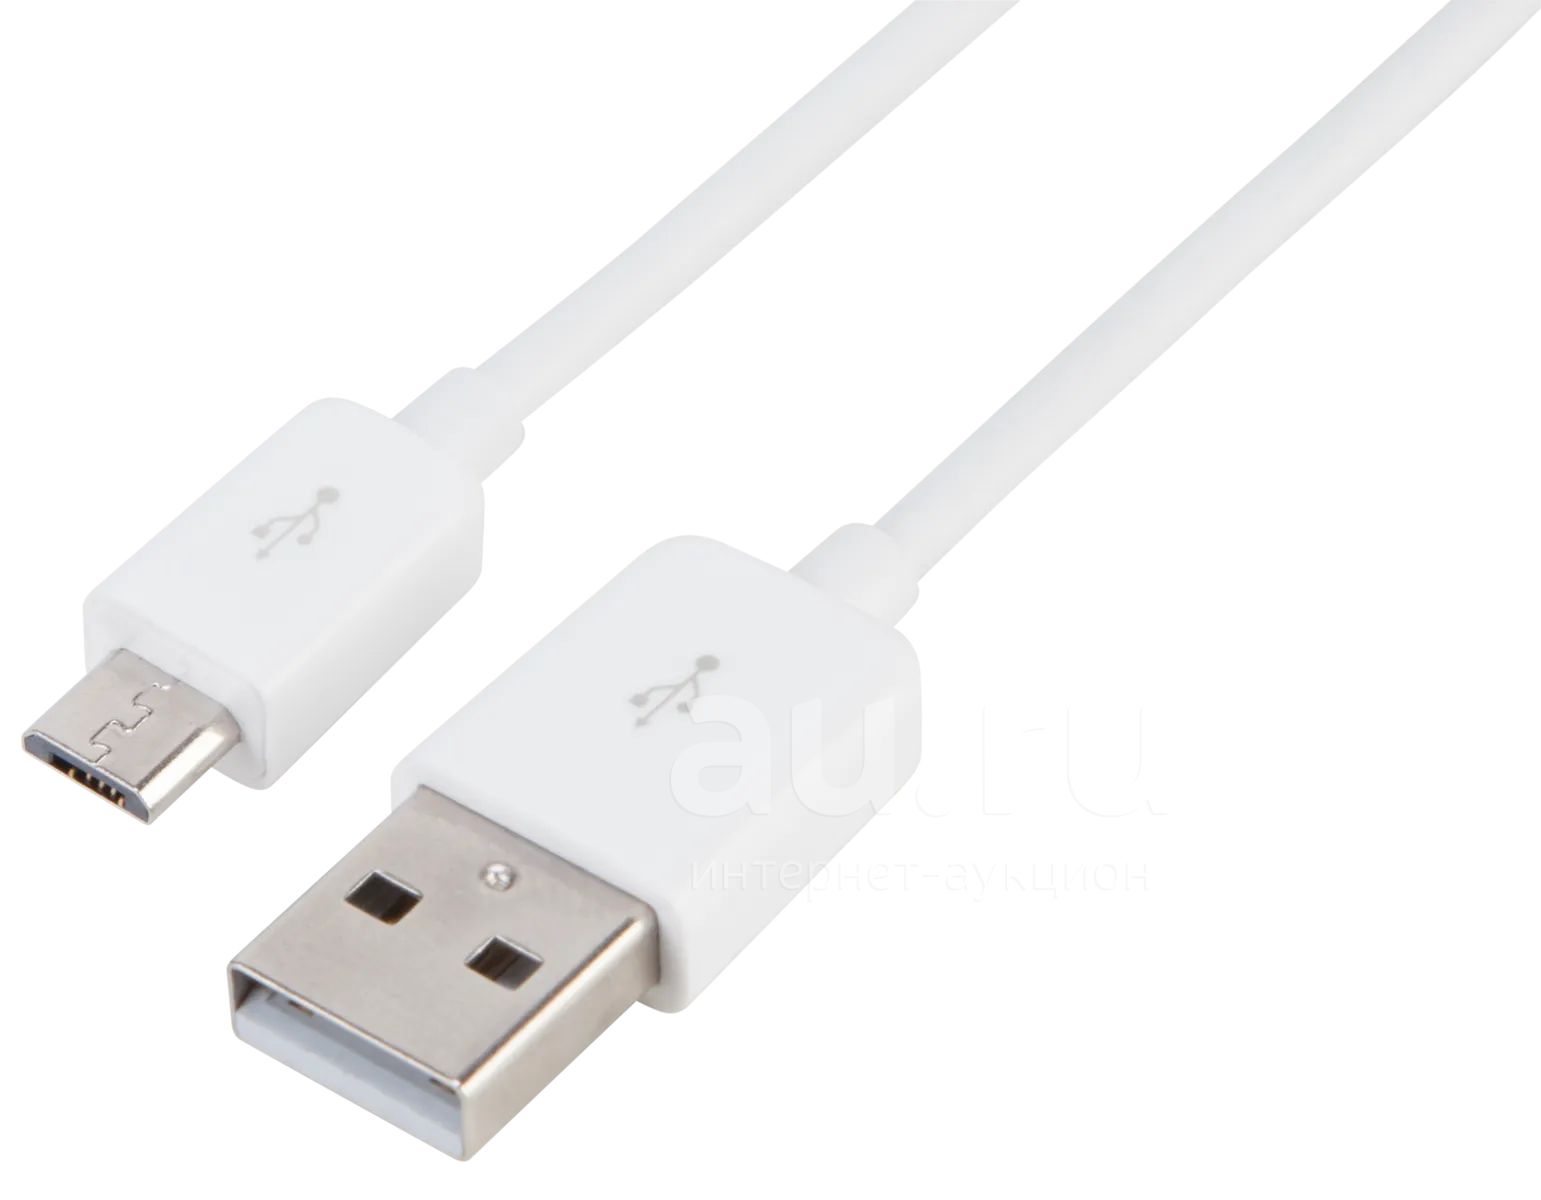 Usb 4 канала. Кабель USB - MICROUSB 1,8 М. Провод Micro USB USB 4a. Кабель микро юсб белый. Кабель Micro USB белый.